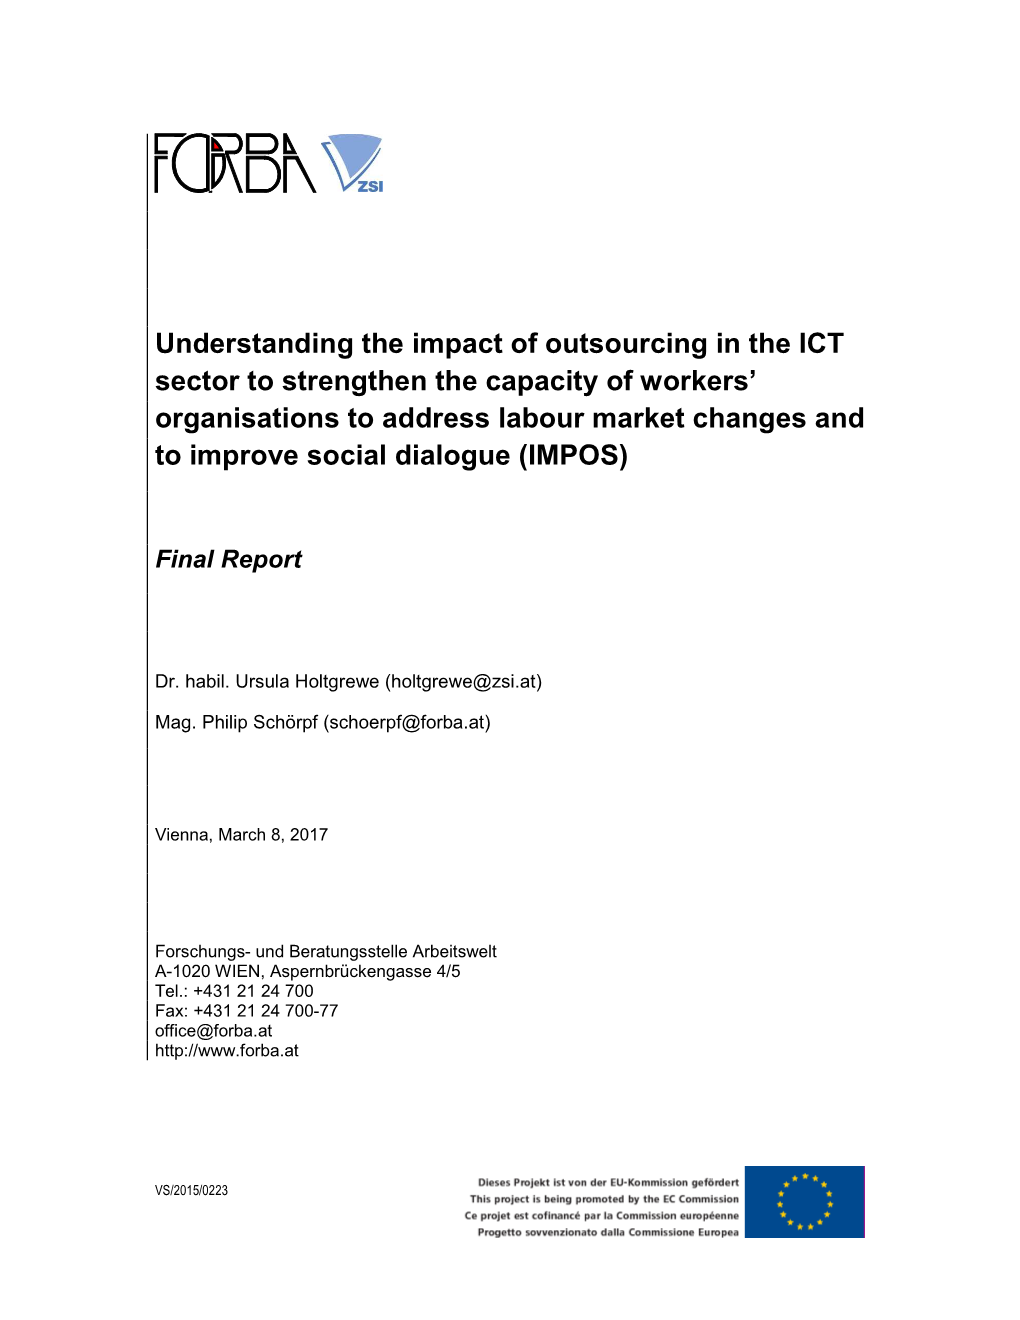 20170308 ICT Outsourcing Final Report EN FV